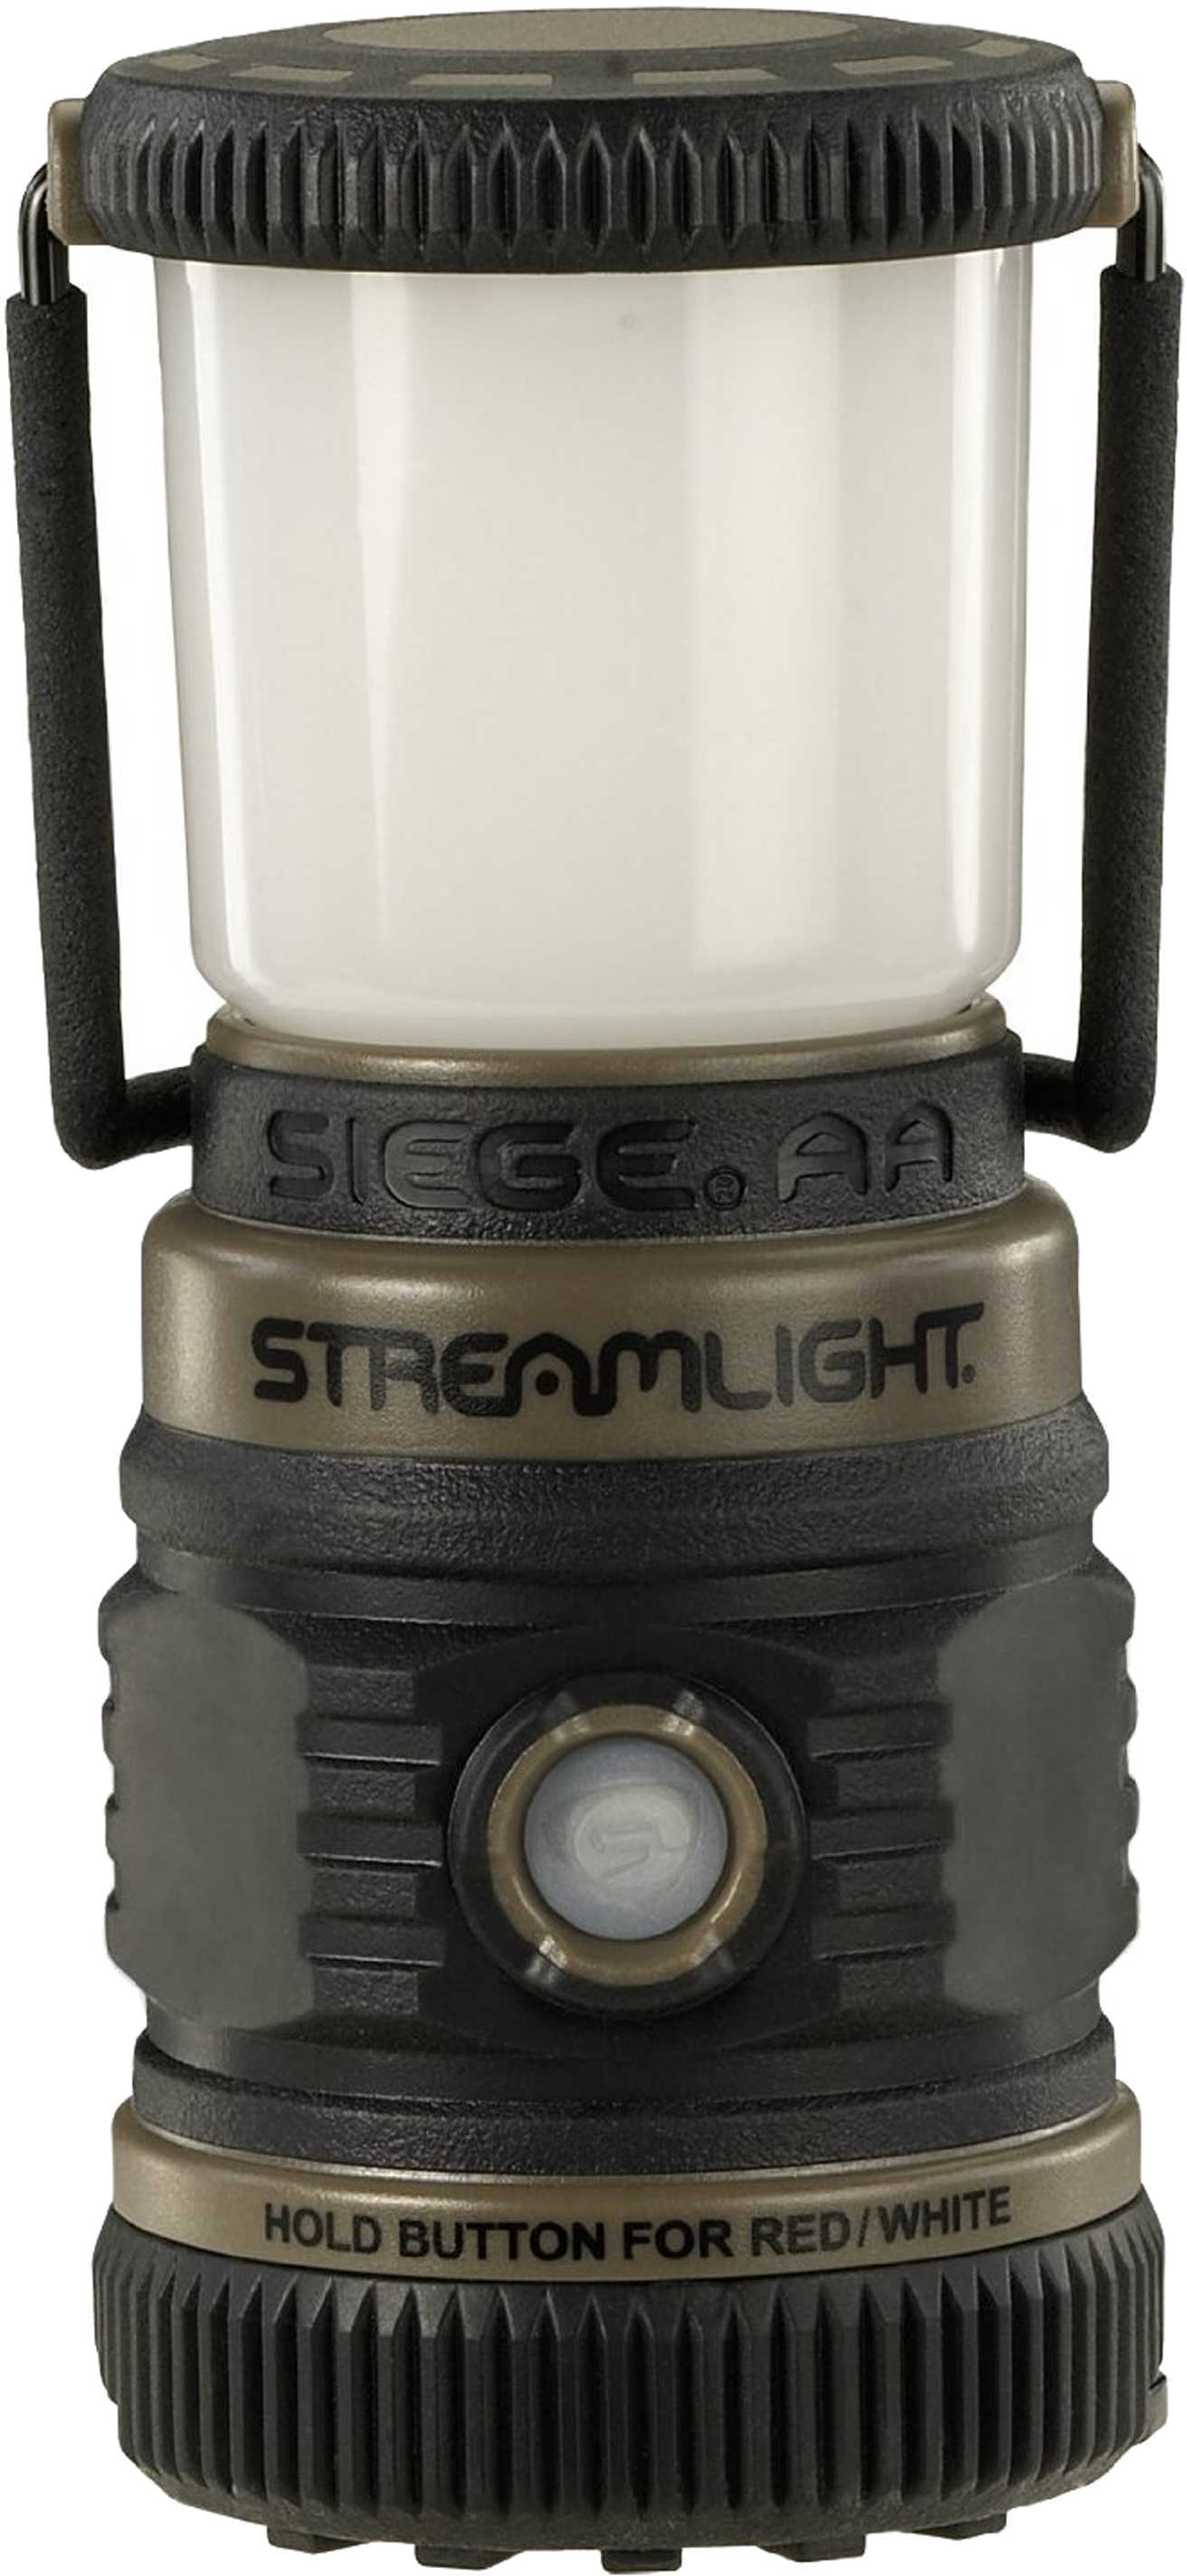 Streamlight Flashlight Siege Aa Coyote Model: 44941